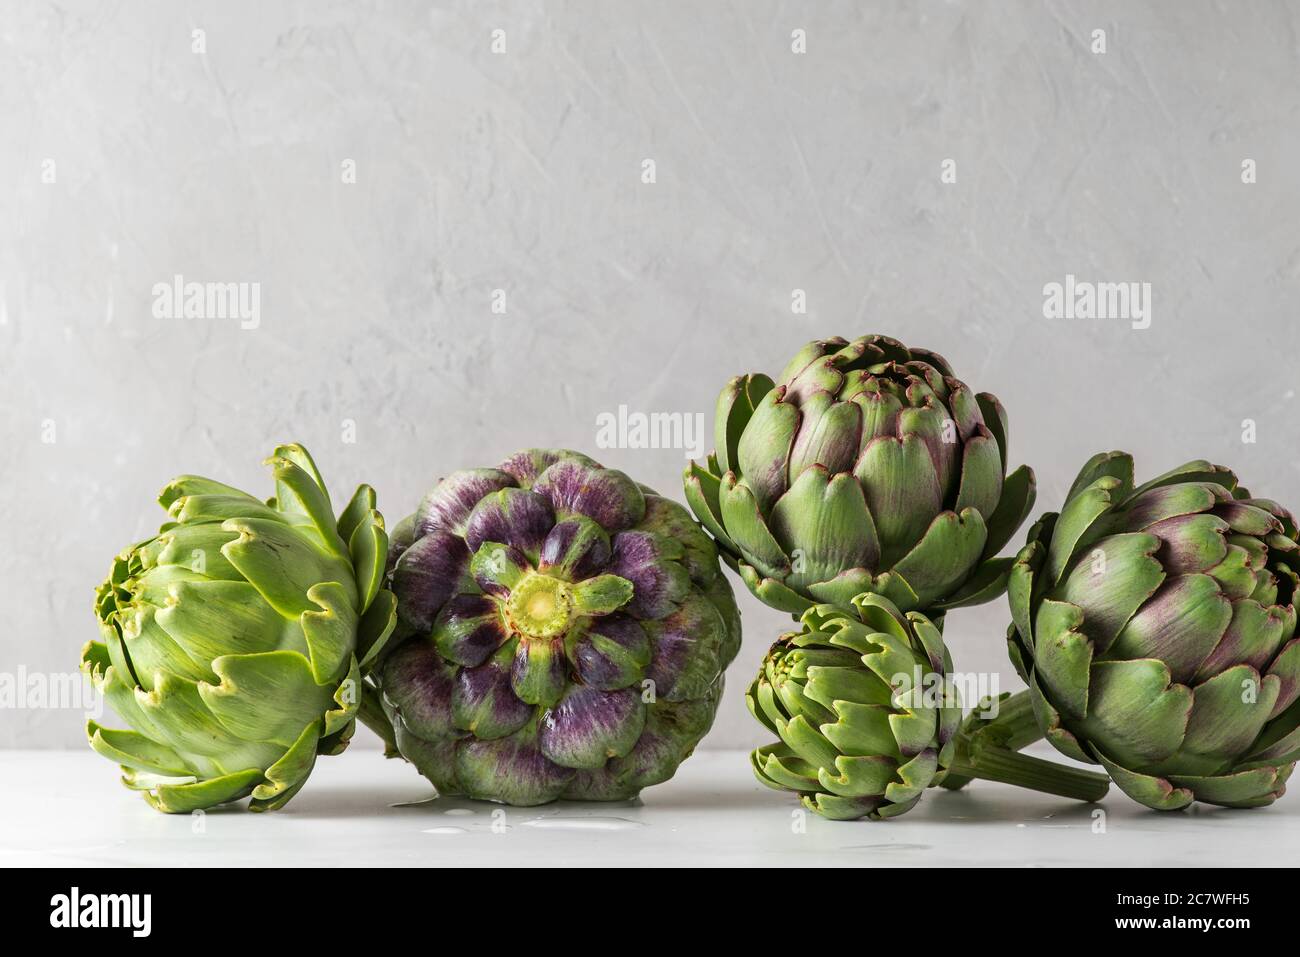 Fresh ripe artichoke on concrete background. Healthy vegan food concept, close up Stock Photo